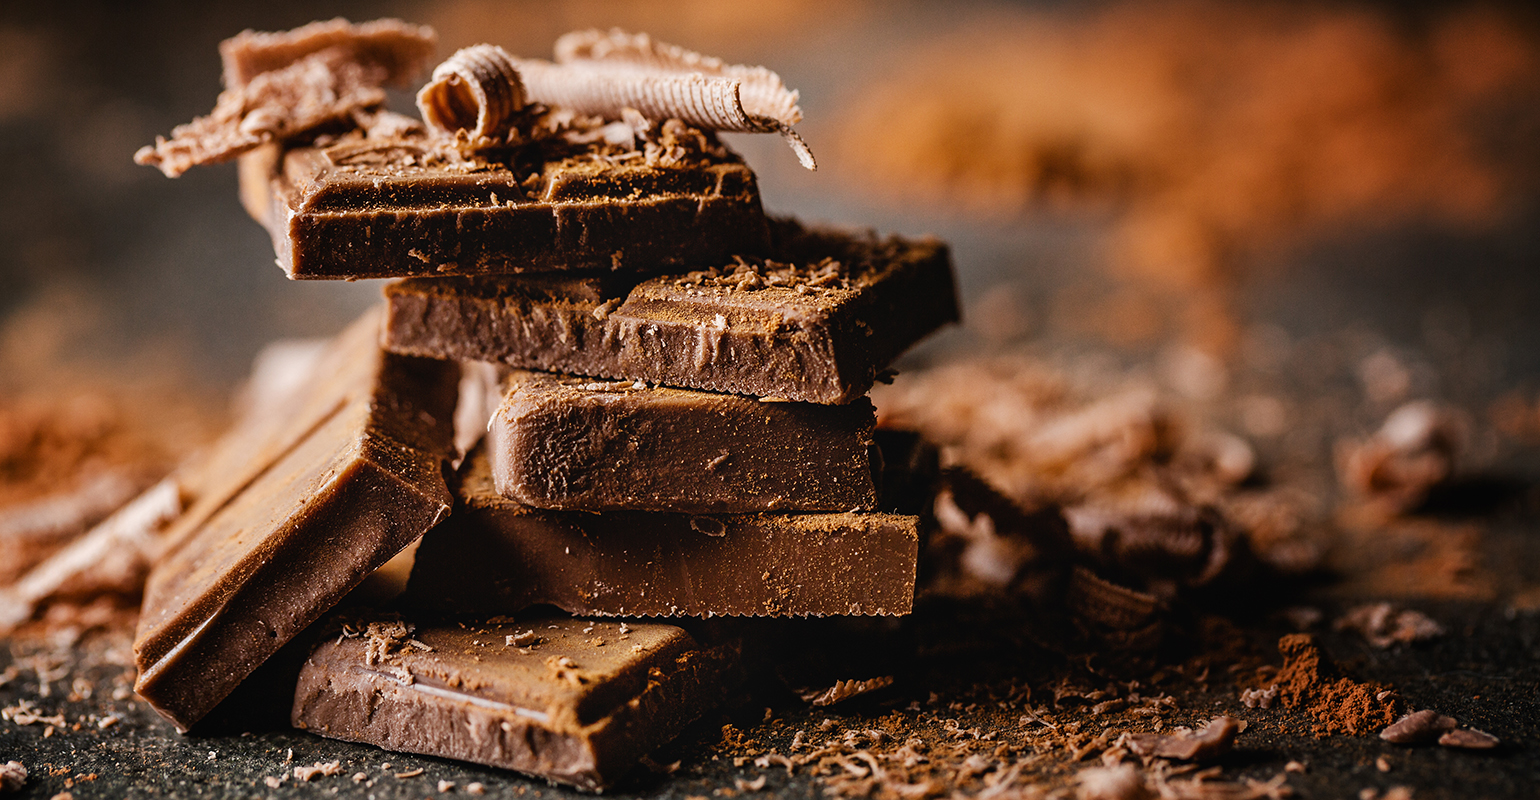 Global pressures on chocolate industry prompt alternative formulations